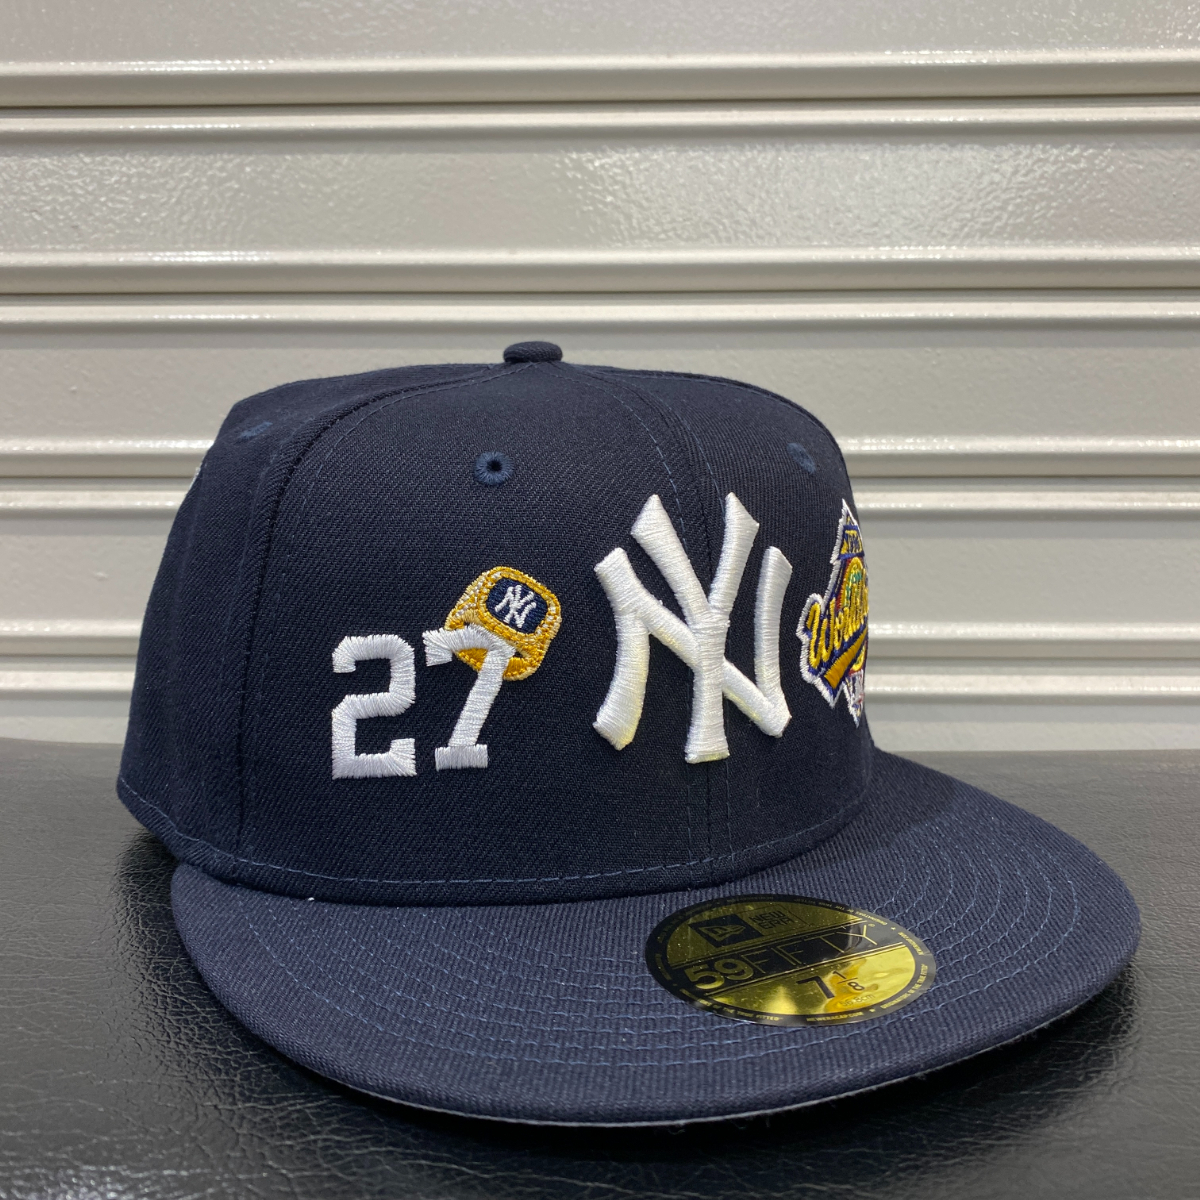 USA限定モデル 【7】 NEWERA ニューエラ MLB ニューヨーク ヤンキース NY Yankees ゴールドリングス Goldrings 米国正規品 59FIFTY